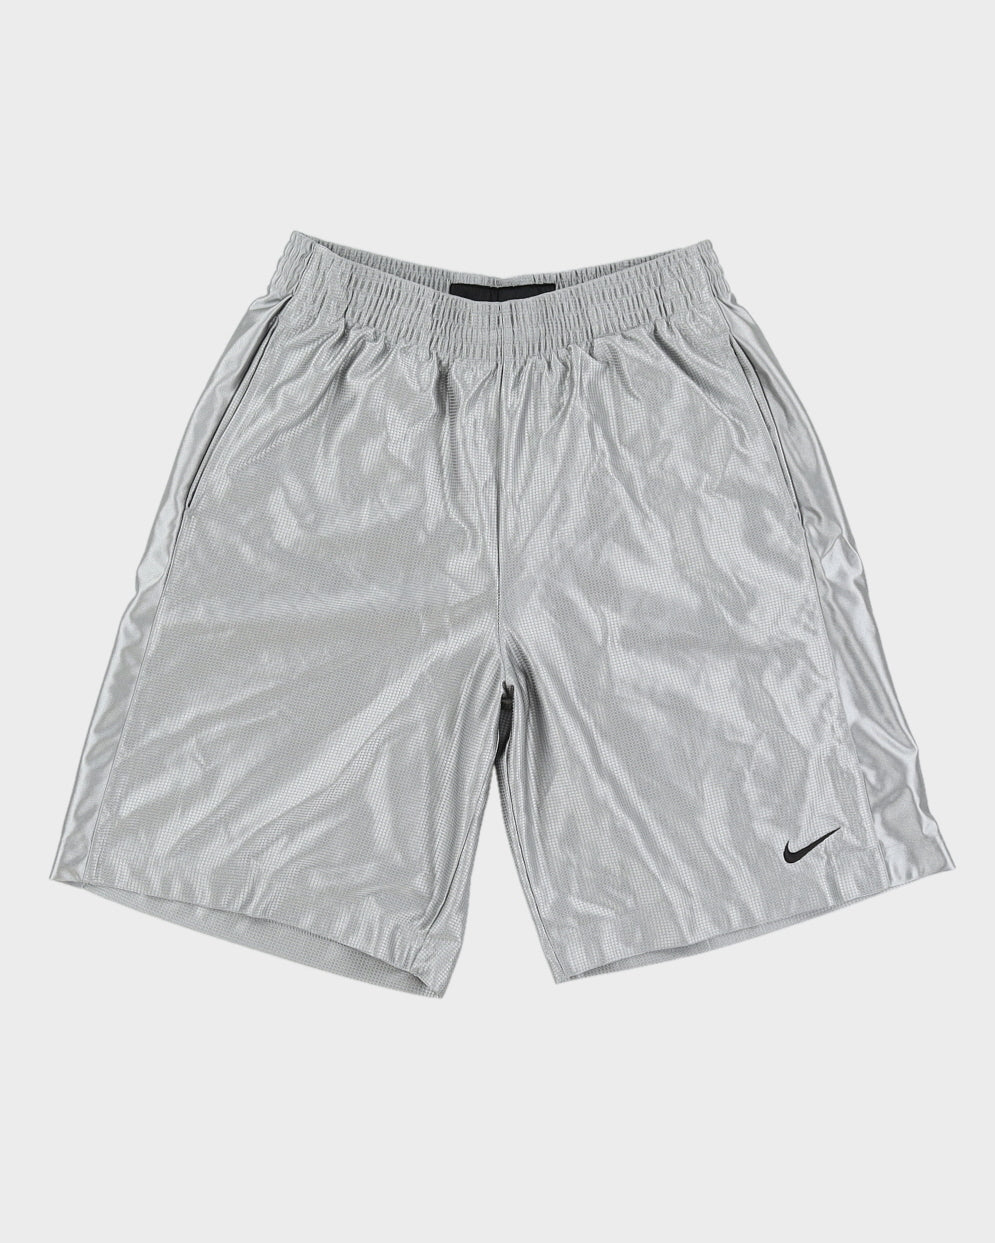 Rare Nike Basketball Dazzle Shorts Silky Silver Black Youth M (Mens XS)